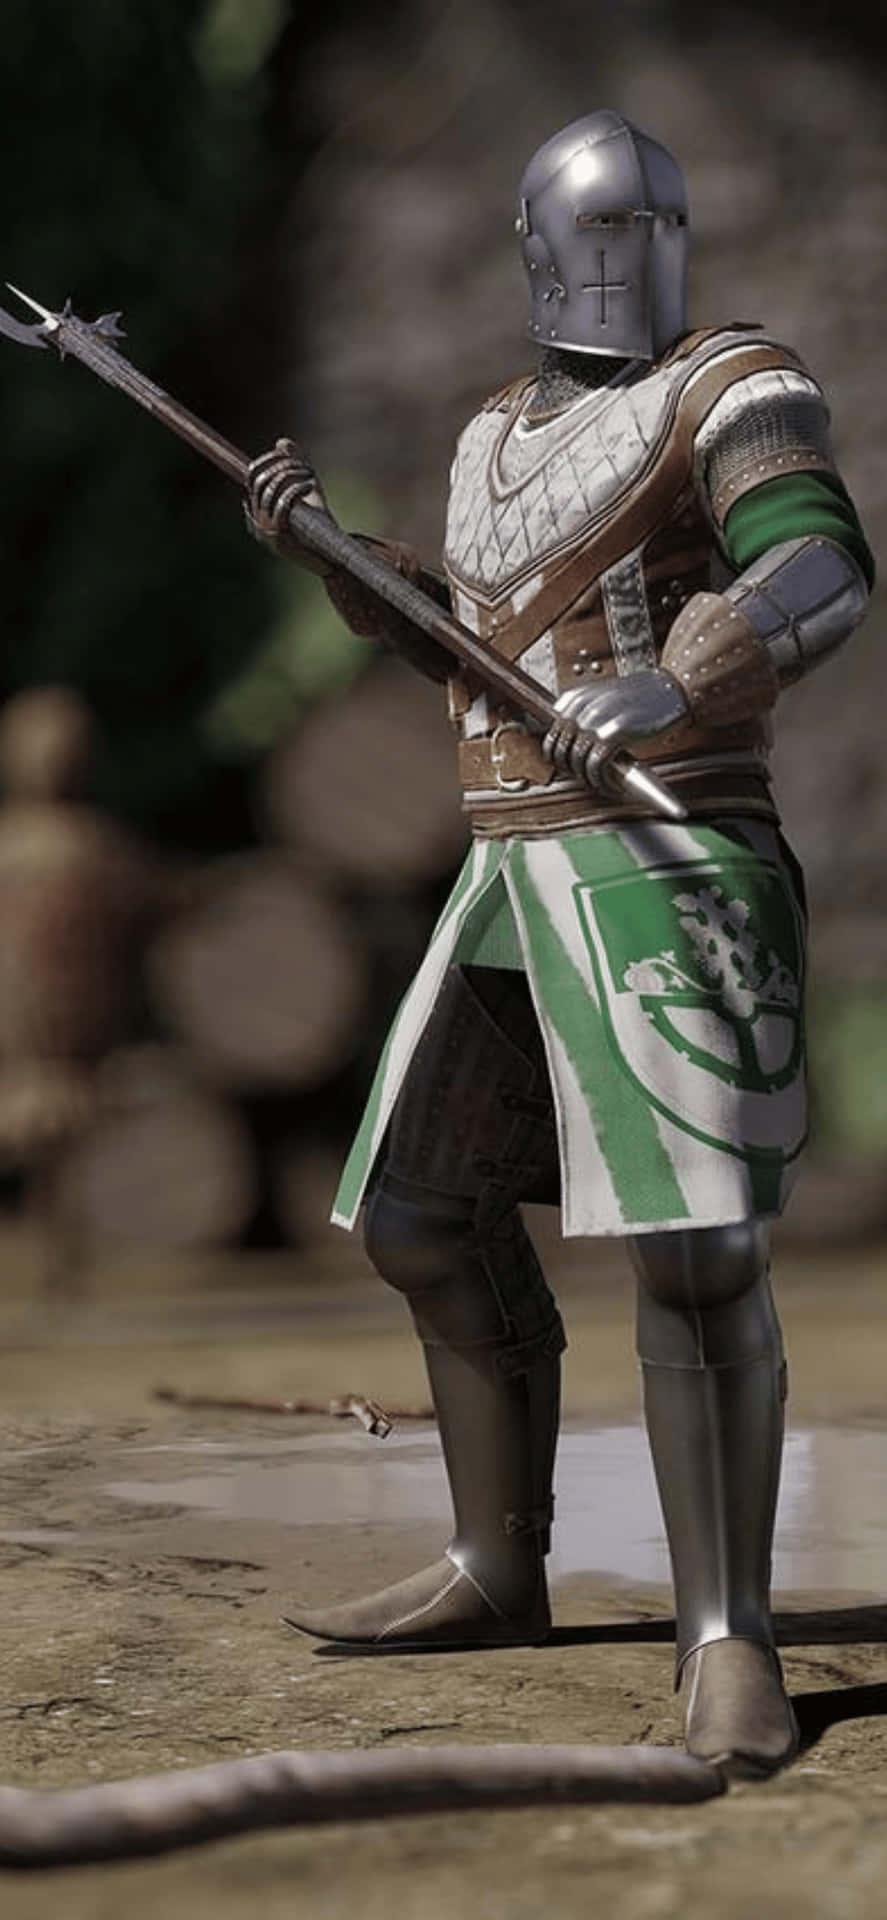 Green Armor Warrior Iphone Xs Mordhau Background